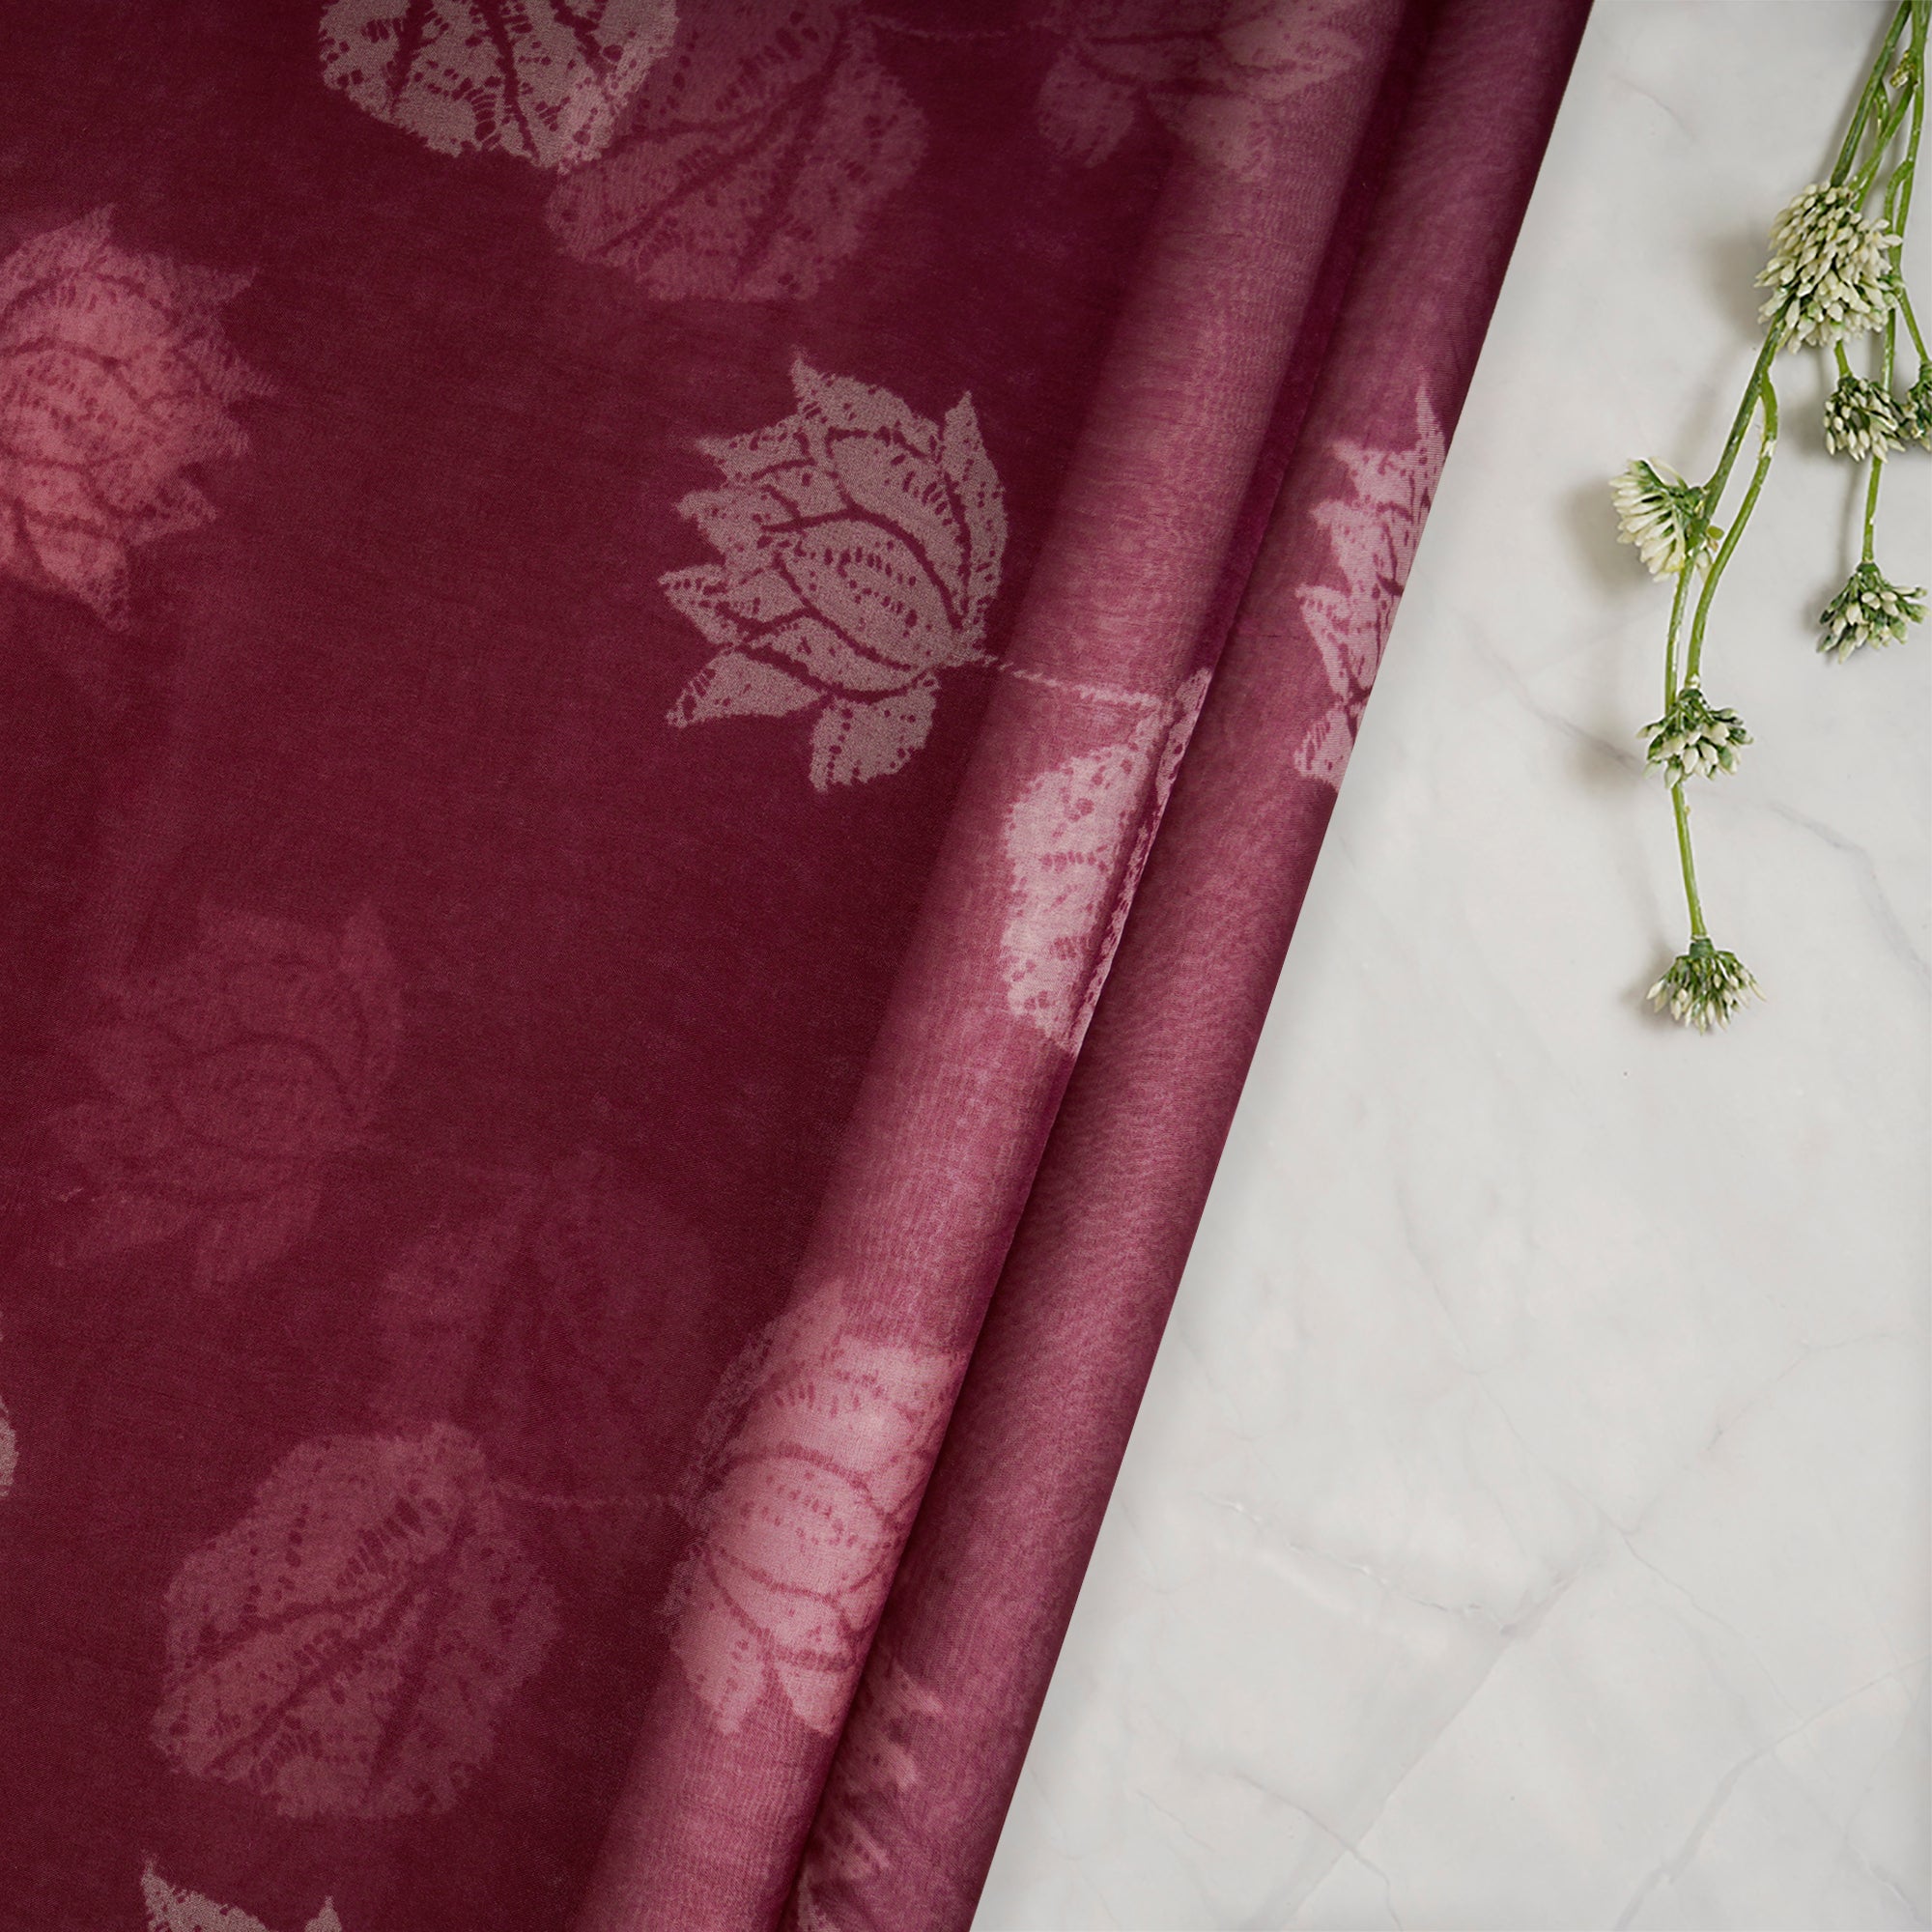 Rhododendron Floral Pattern Digital Print Organza Silk Fabric